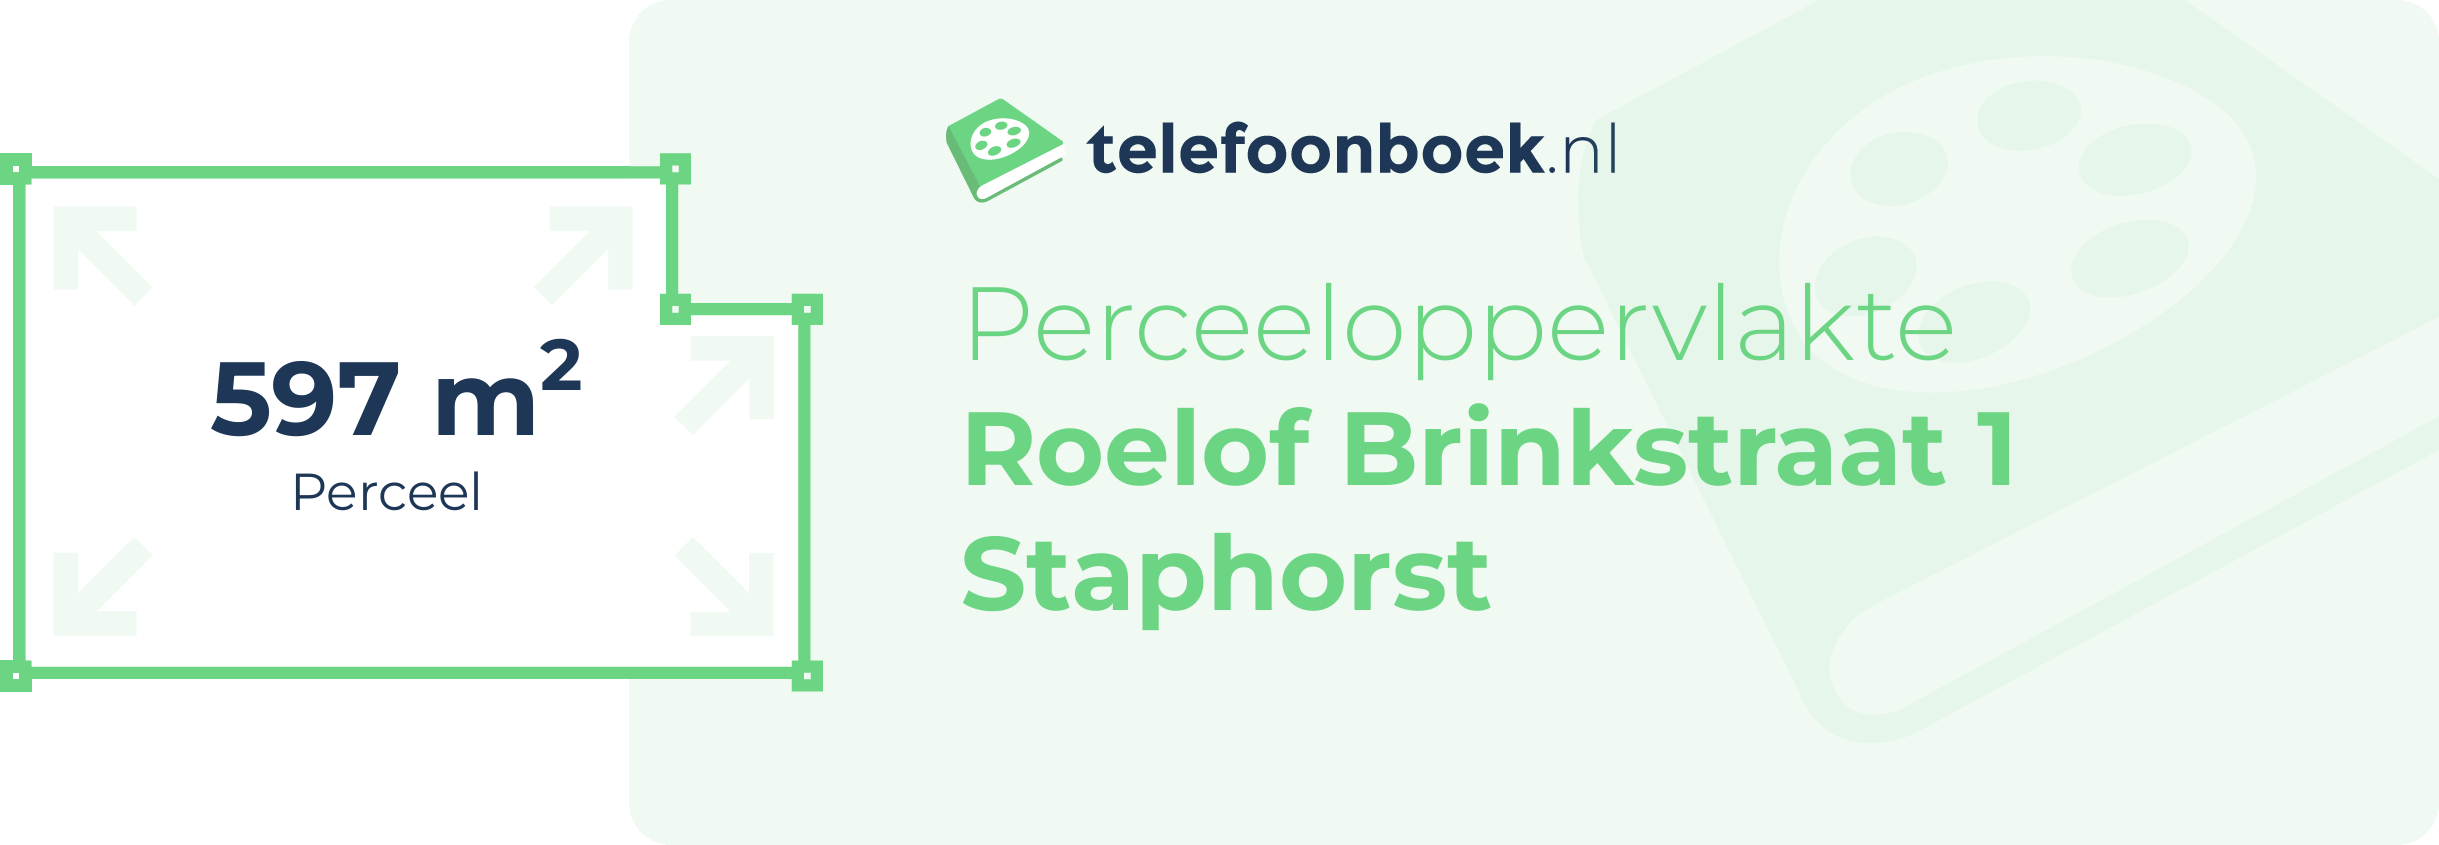 Perceeloppervlakte Roelof Brinkstraat 1 Staphorst